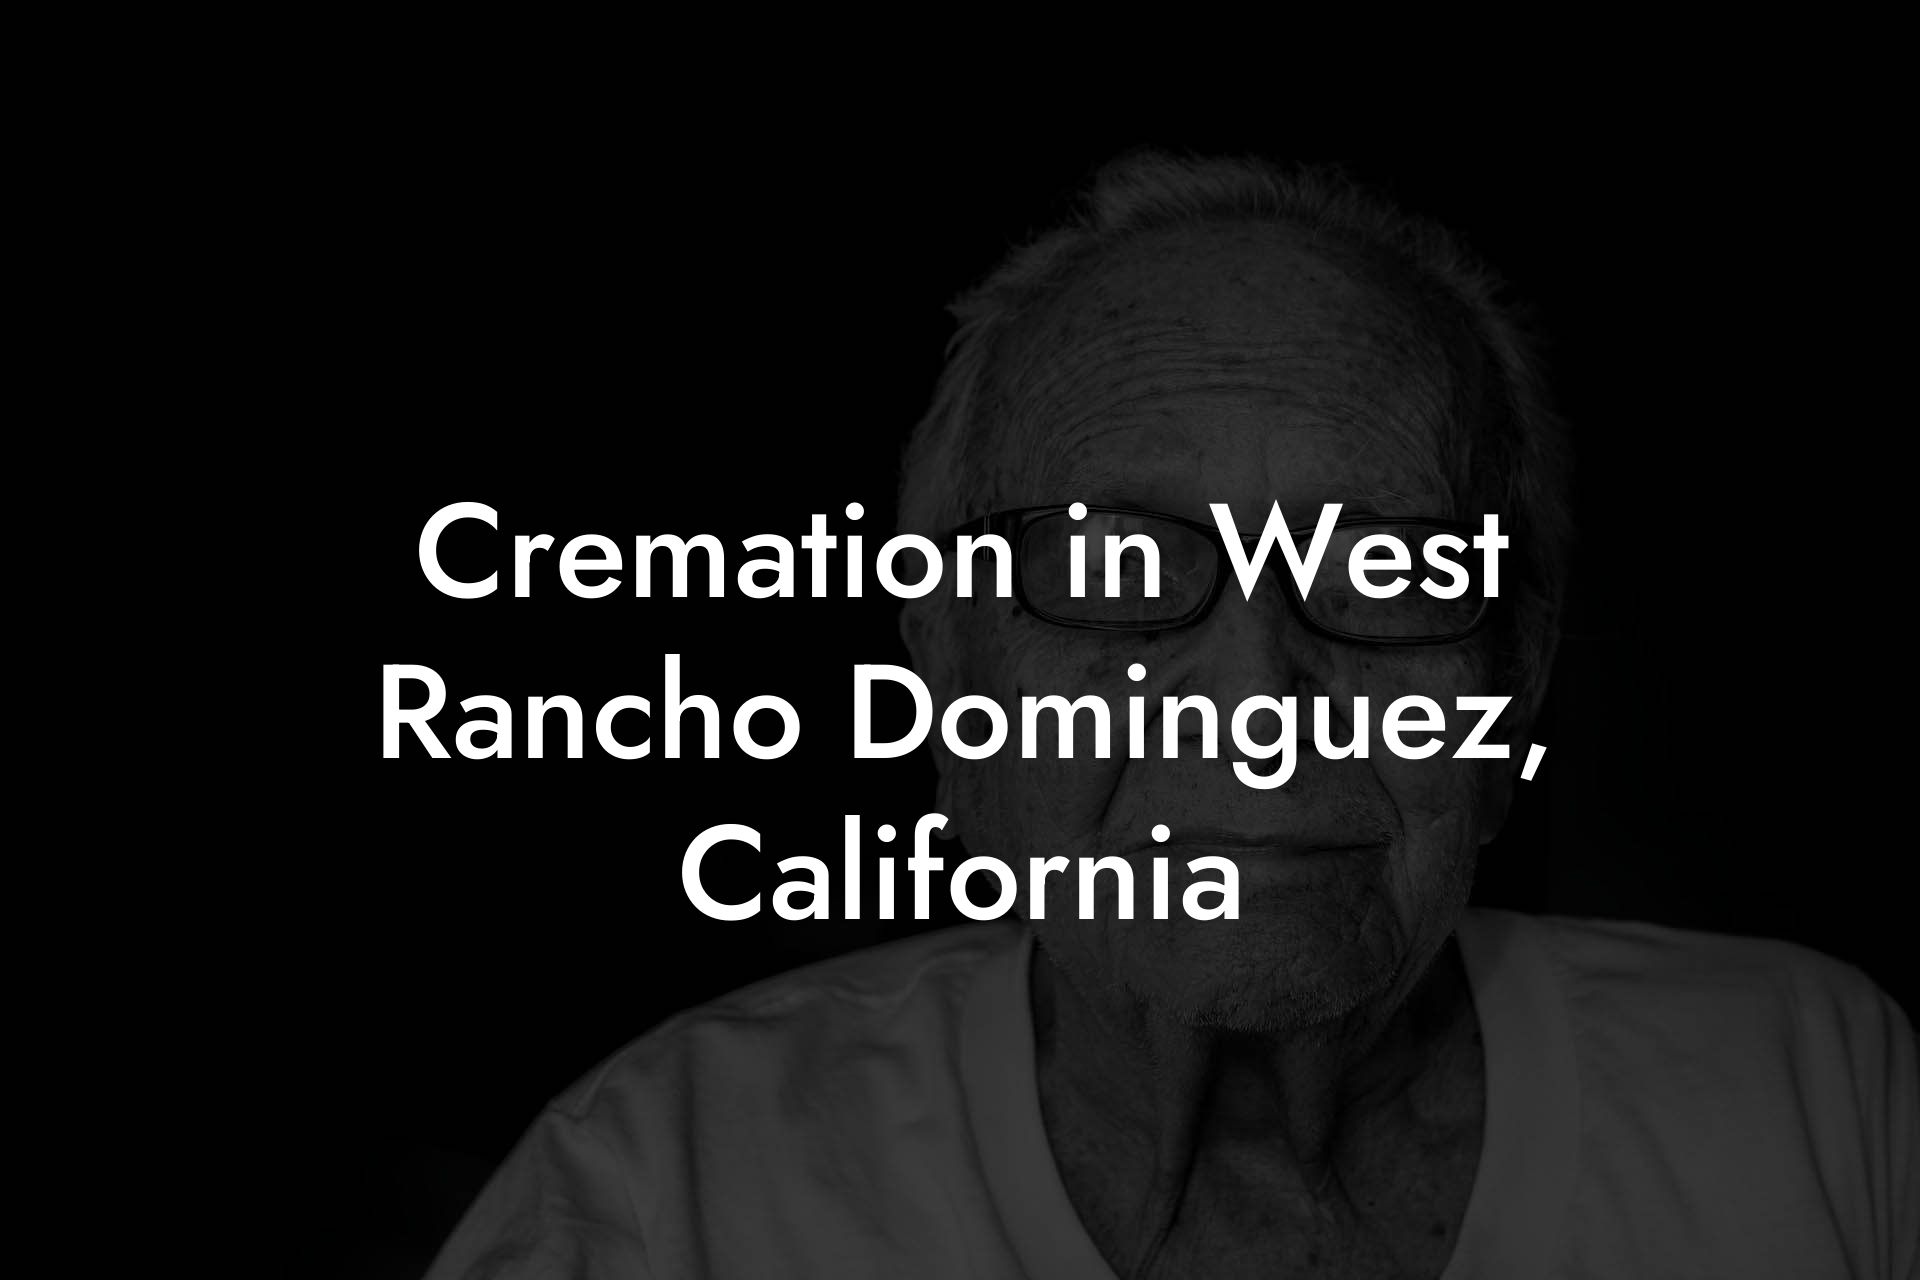 Cremation in West Rancho Dominguez, California